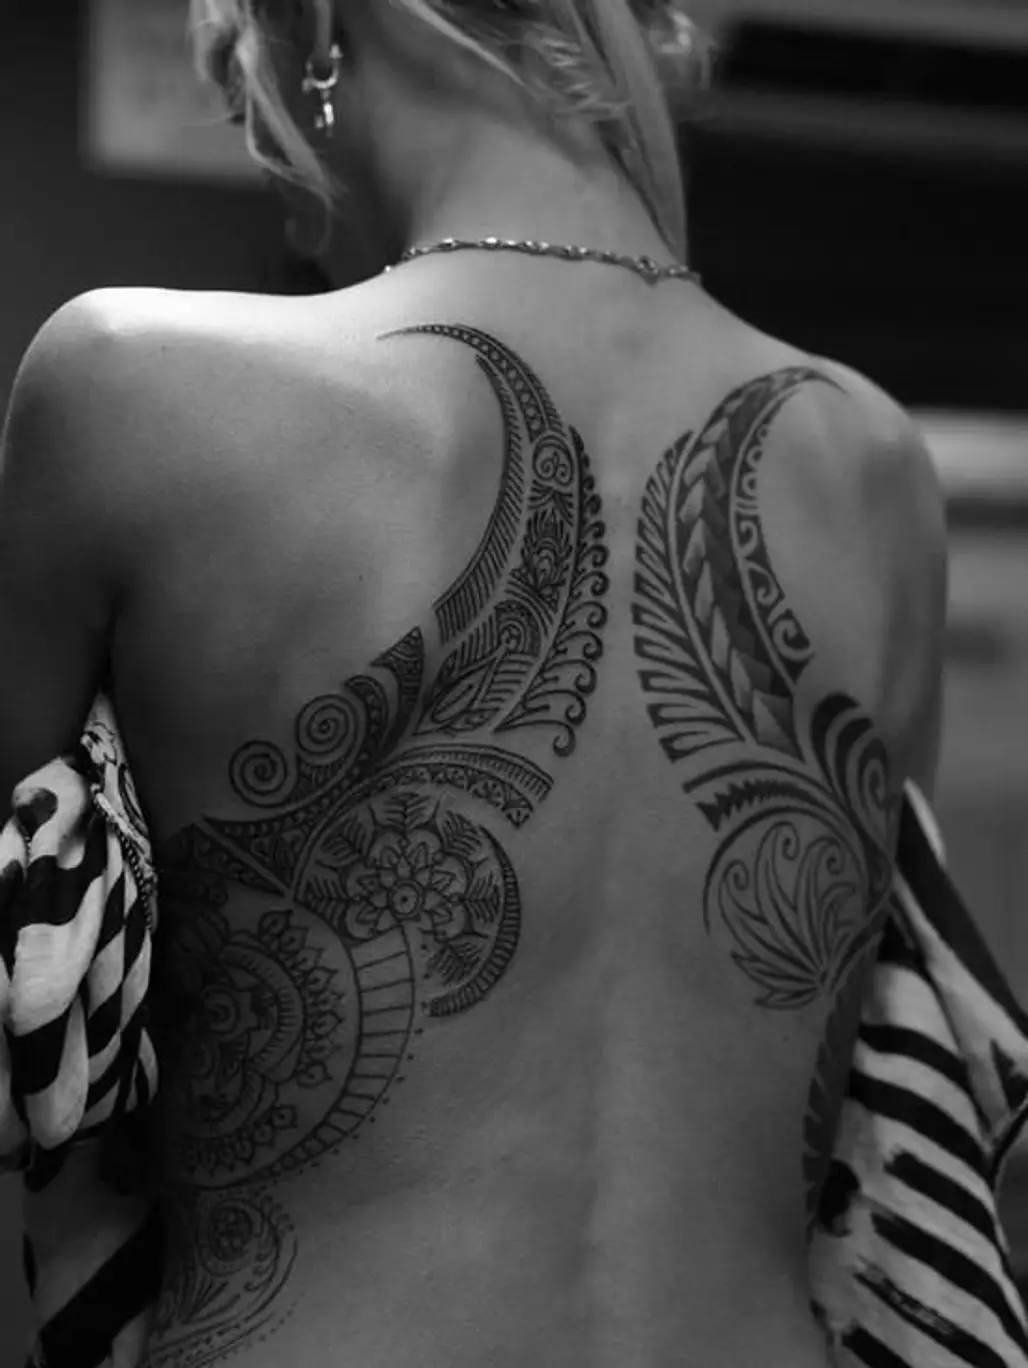 Tanekaha Ink, Award Winning Temporary and Permanant Maori Tattoo Shop